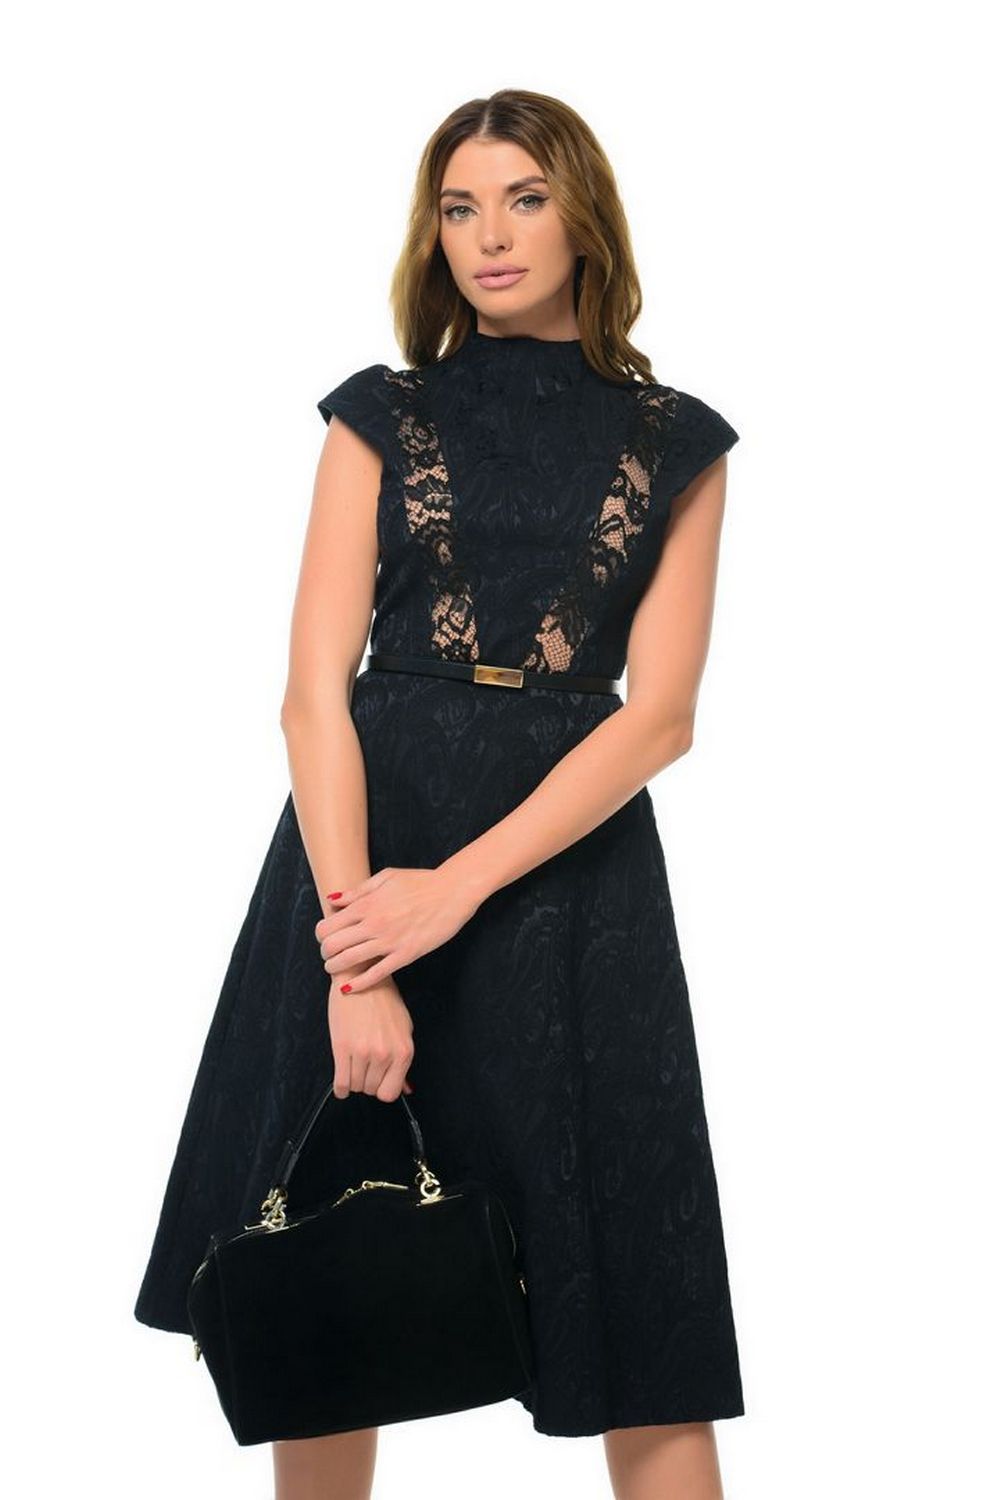 Buy Women Black Guipure Lace Elegant dress, Knee length short sleeve party dress by Arefeva